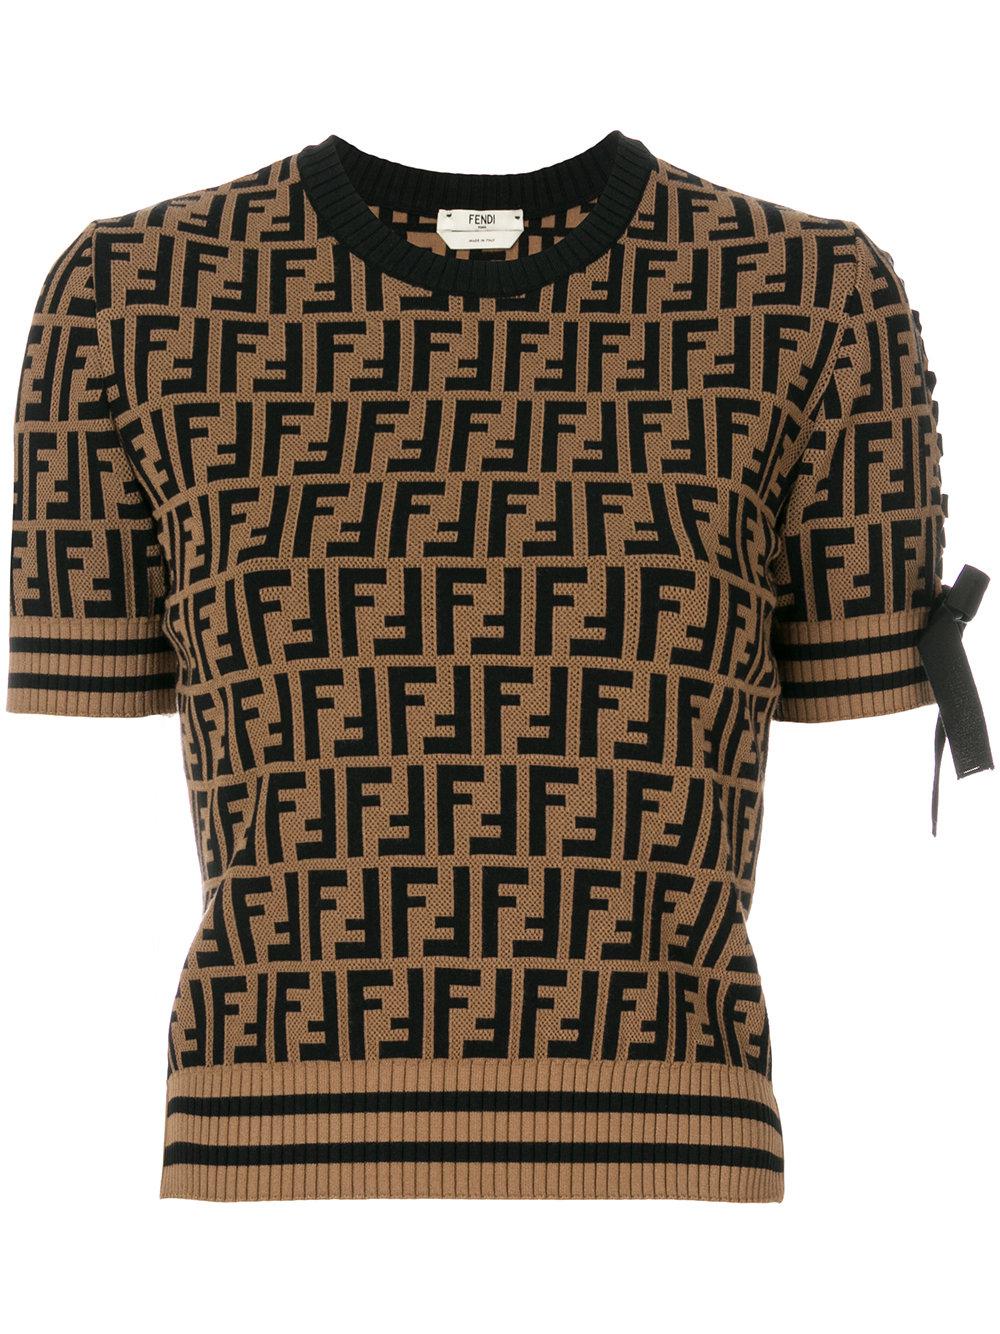 Fendi Synthetic Logo Short-sleeve Sweater in Brown - Lyst